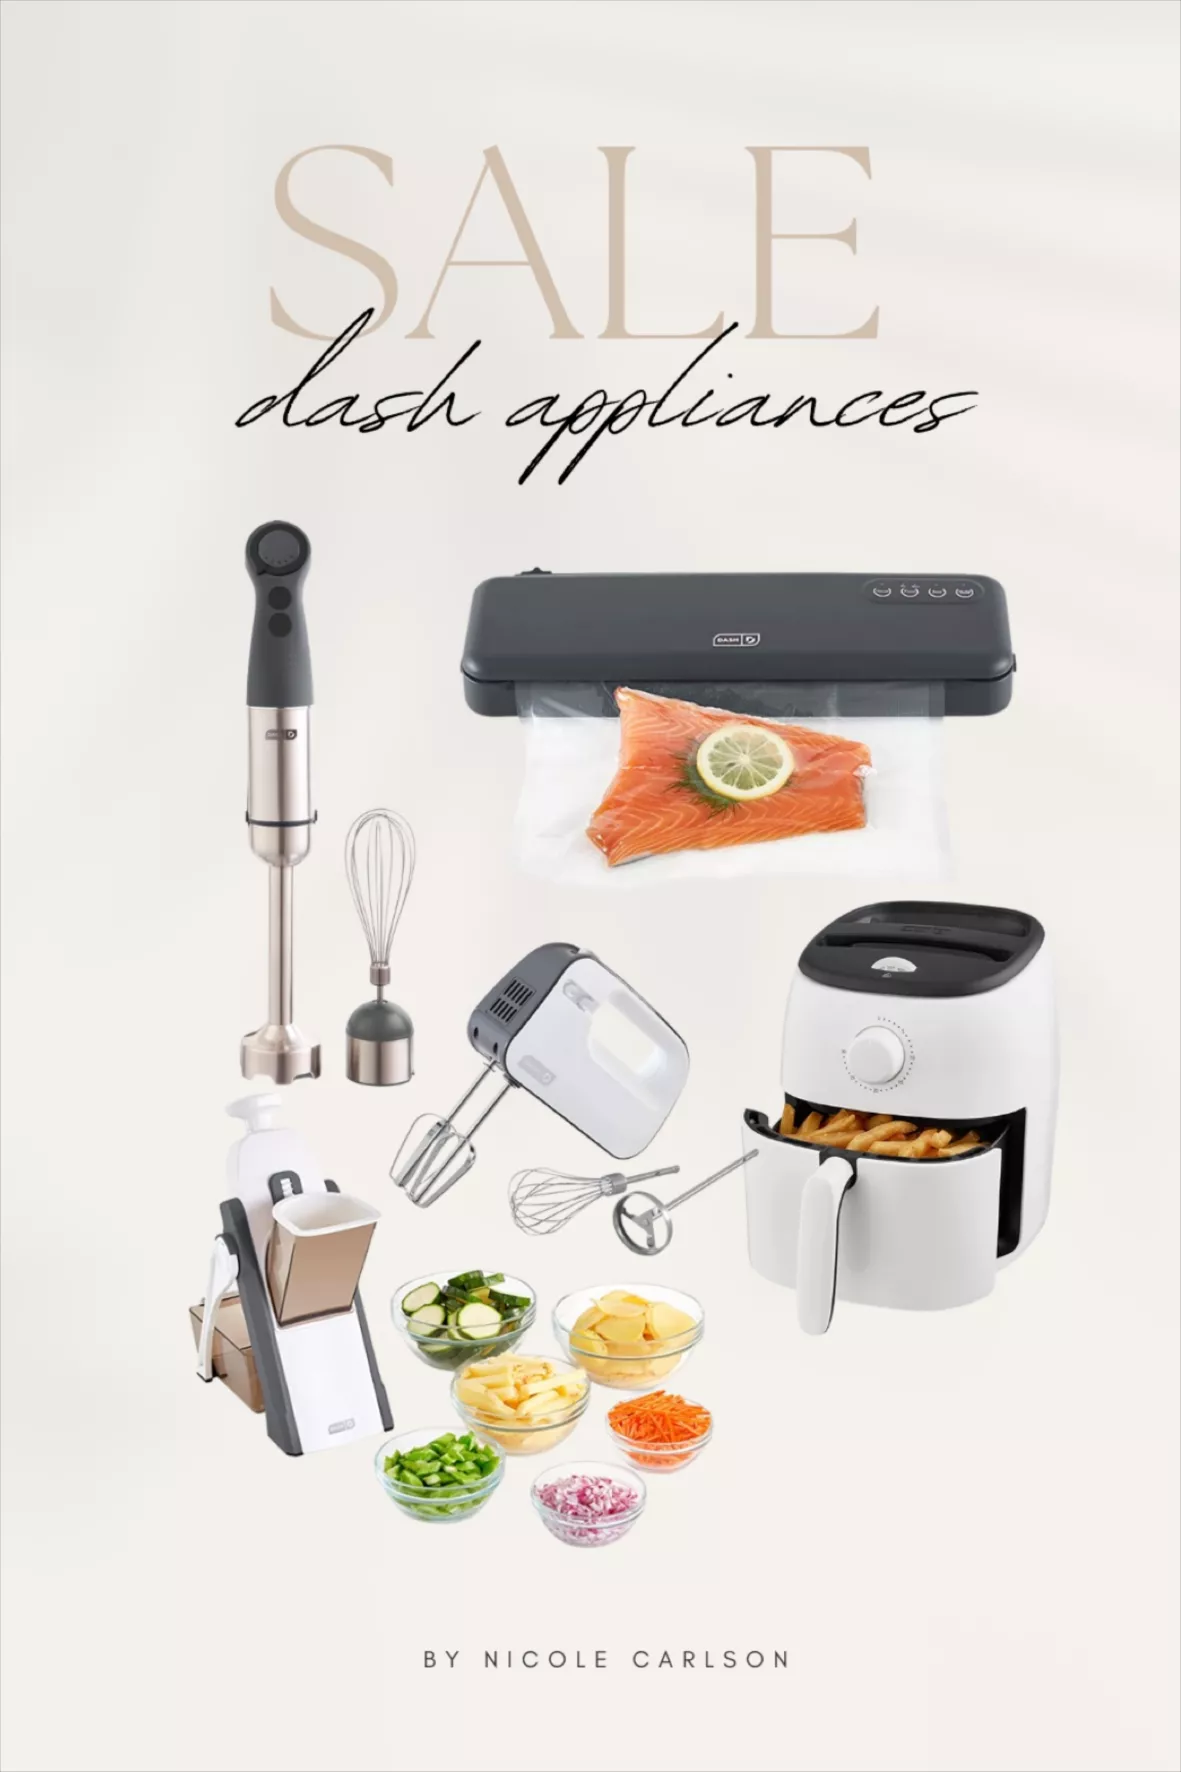 dash specialty appliances 